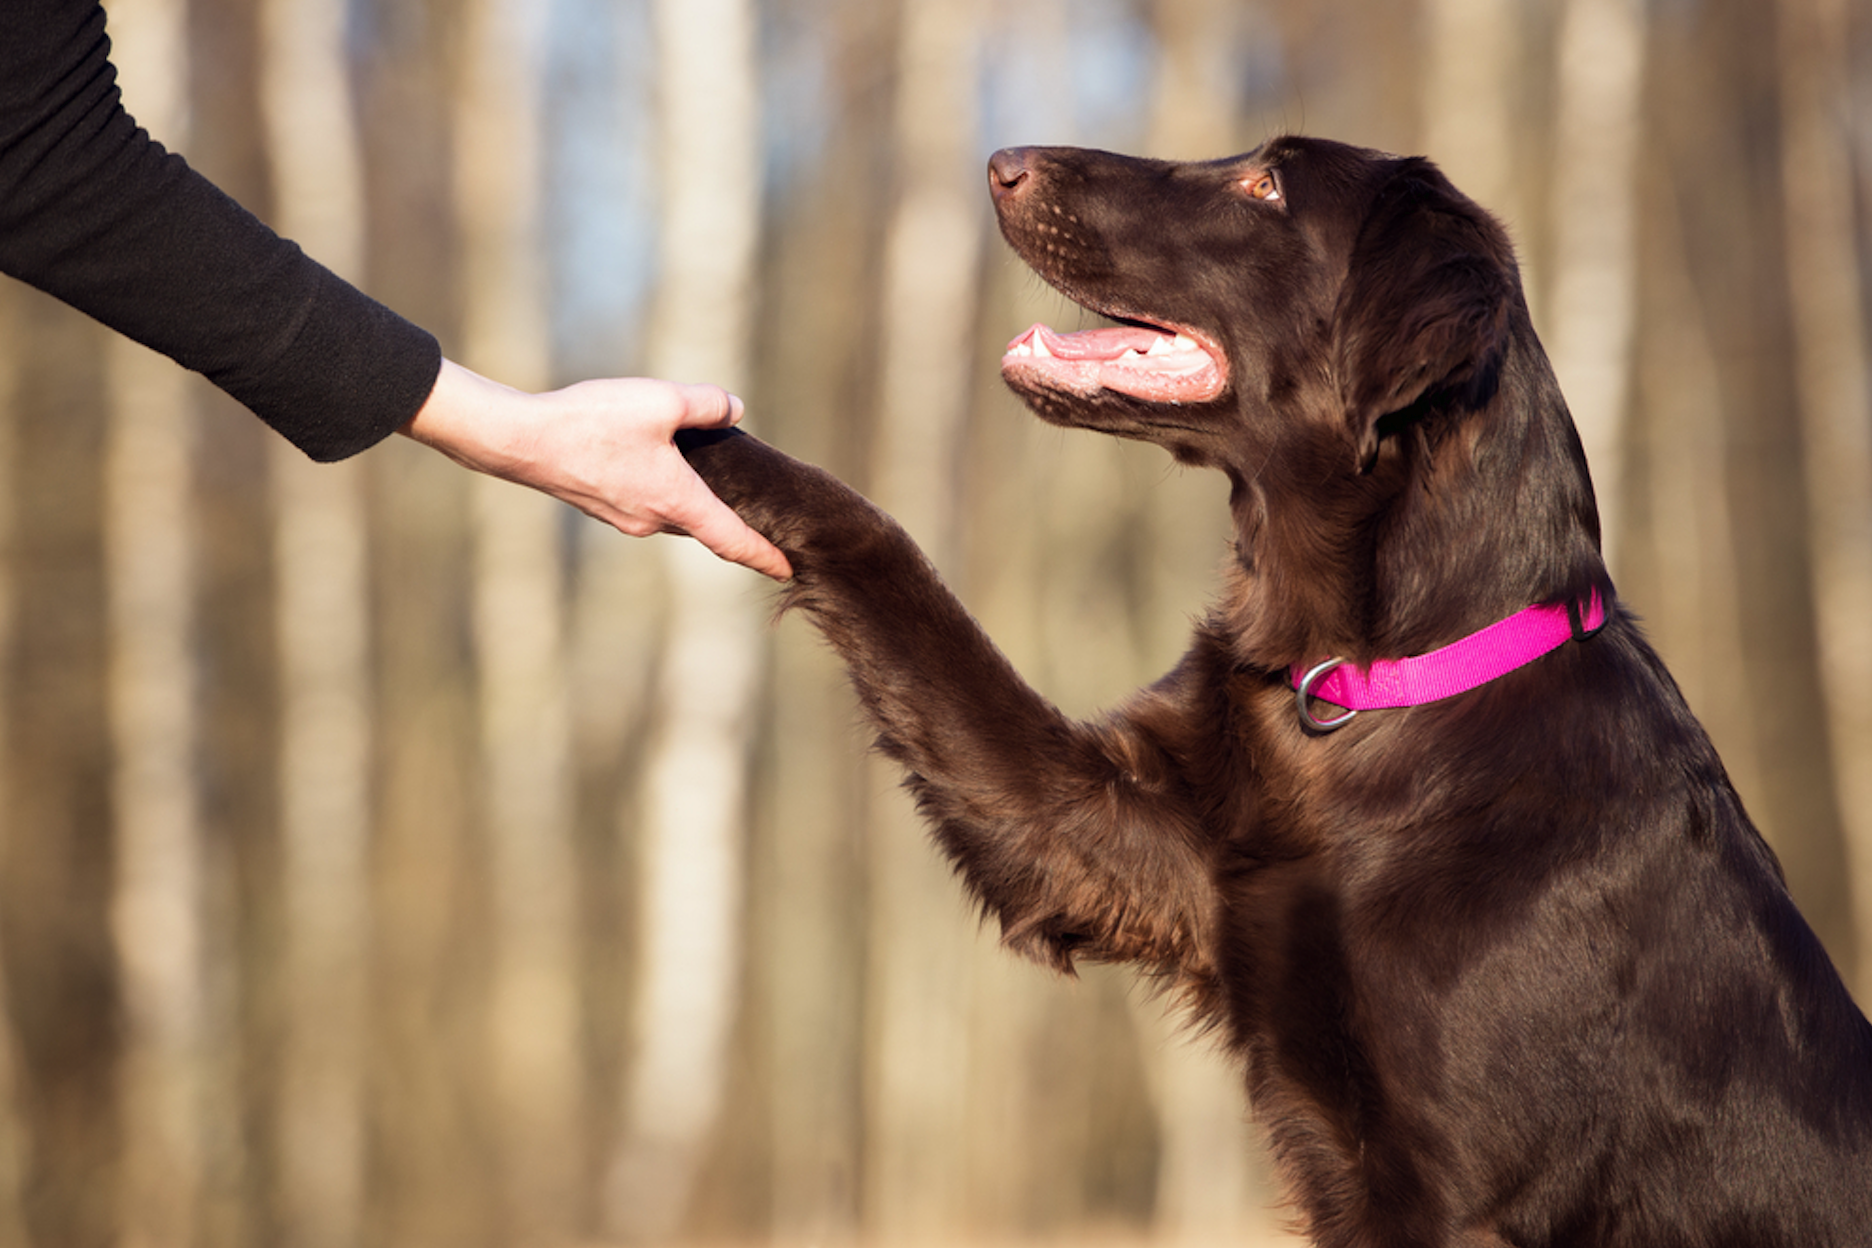 Should Dog Trainers Focus on Online Branding?